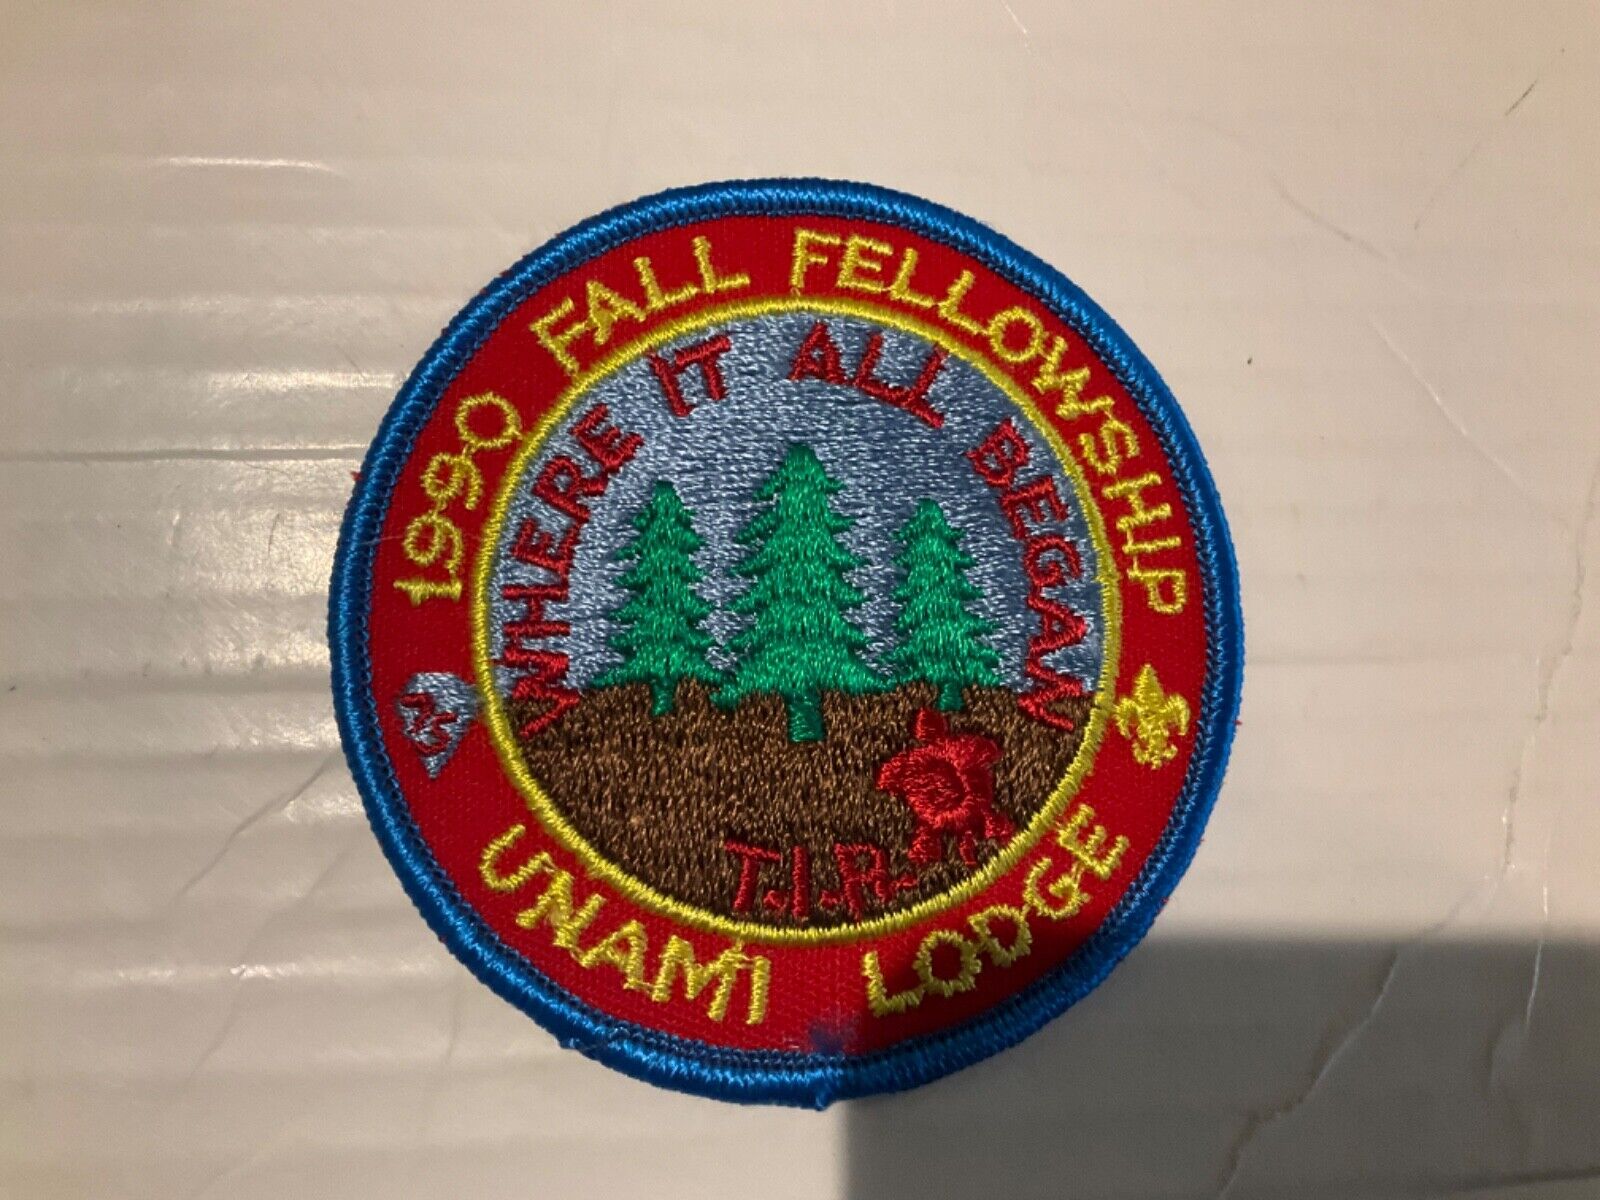 Unami Lodge One 1990 Treasure Island Fall Fellowship event patch SALE